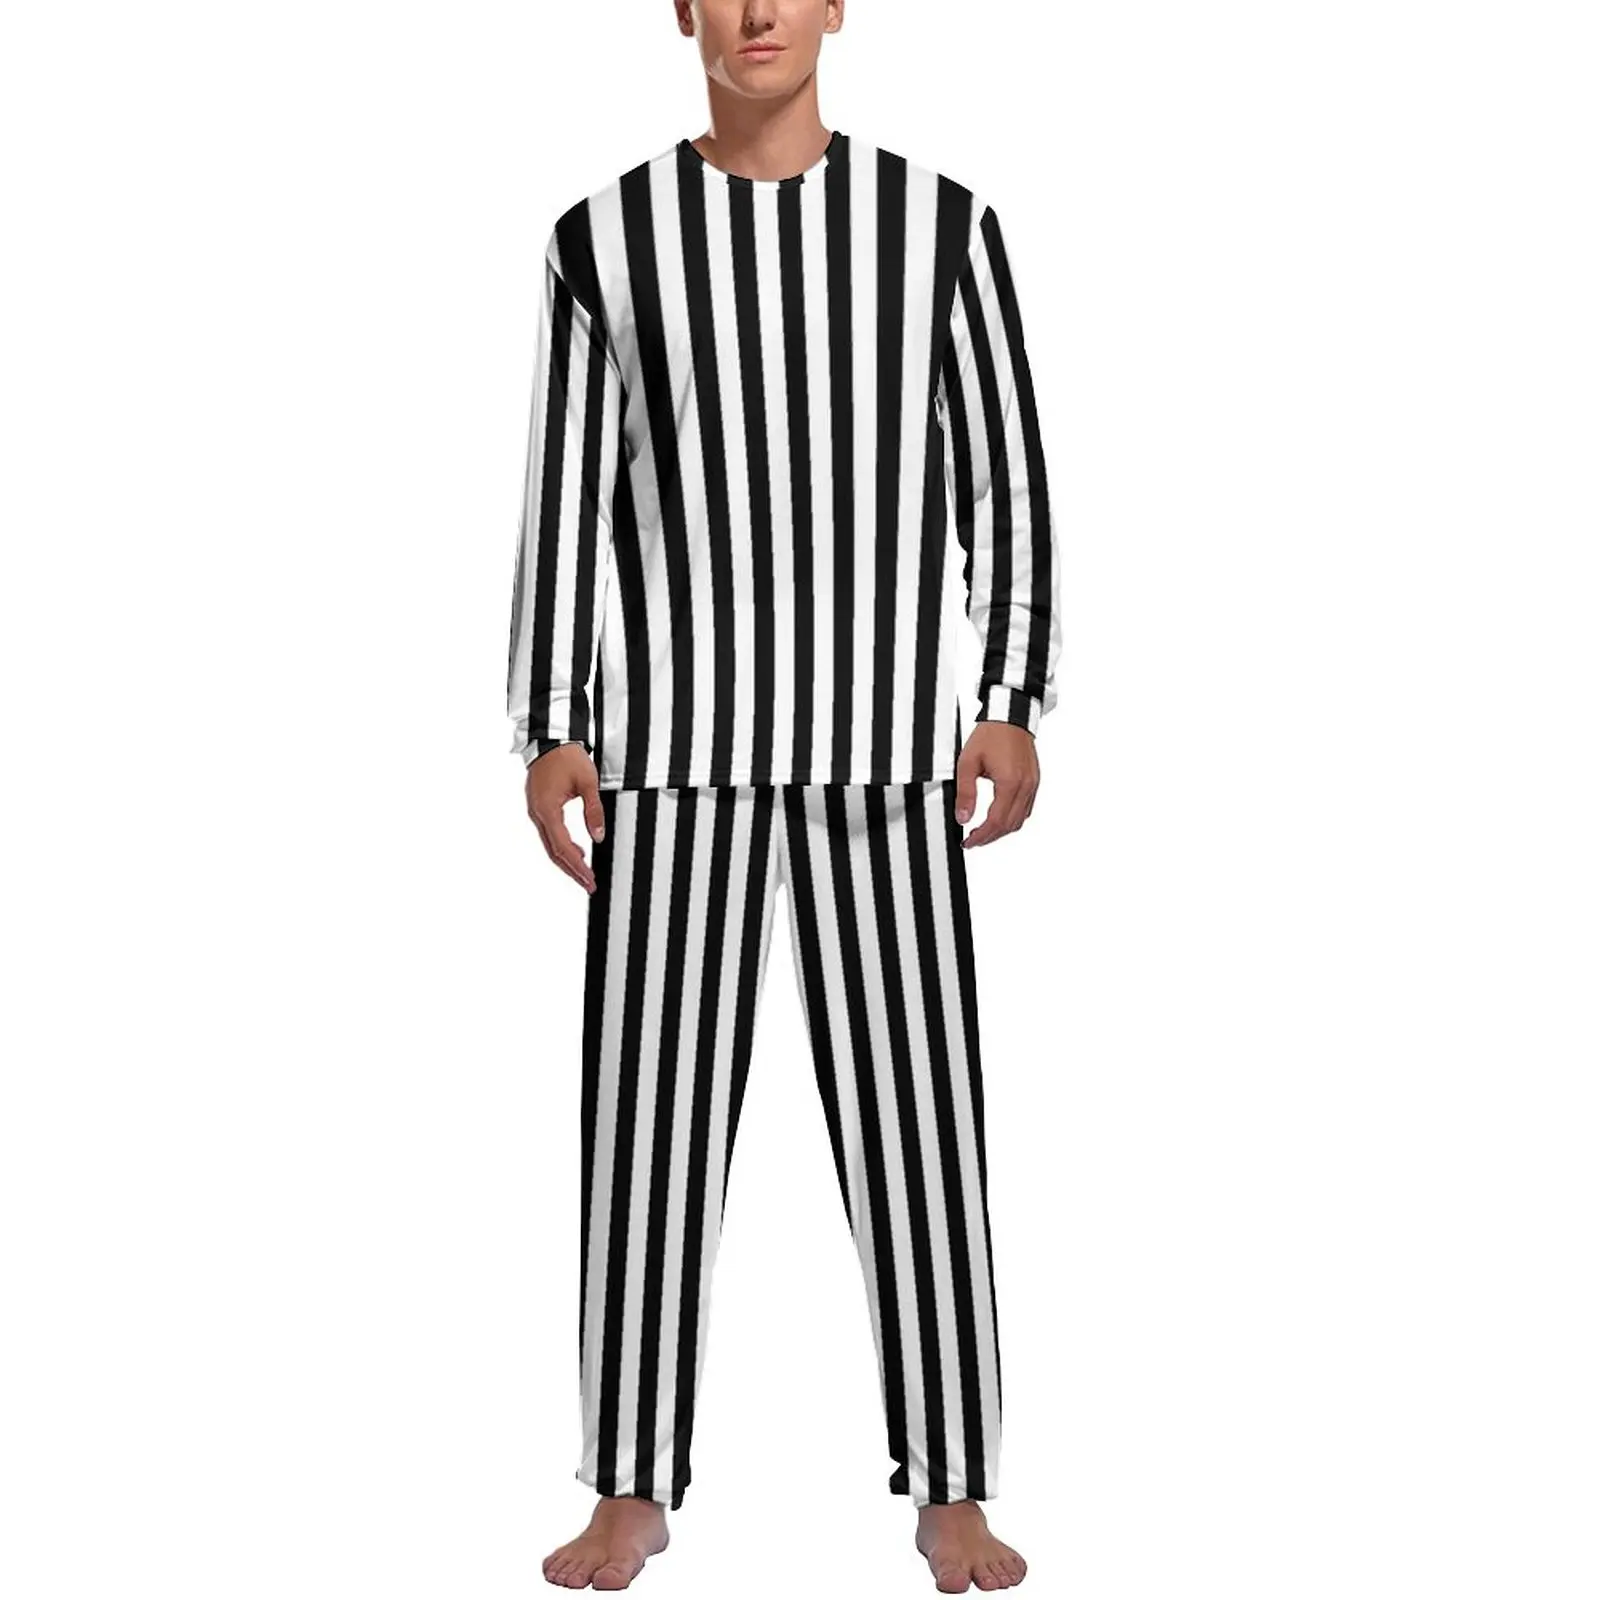 Black White Striped Pajamas Daily 2 Piece Vertical Lines Print Elegant Pajamas Set Man Long Sleeve Bedroom Custom Nightwear